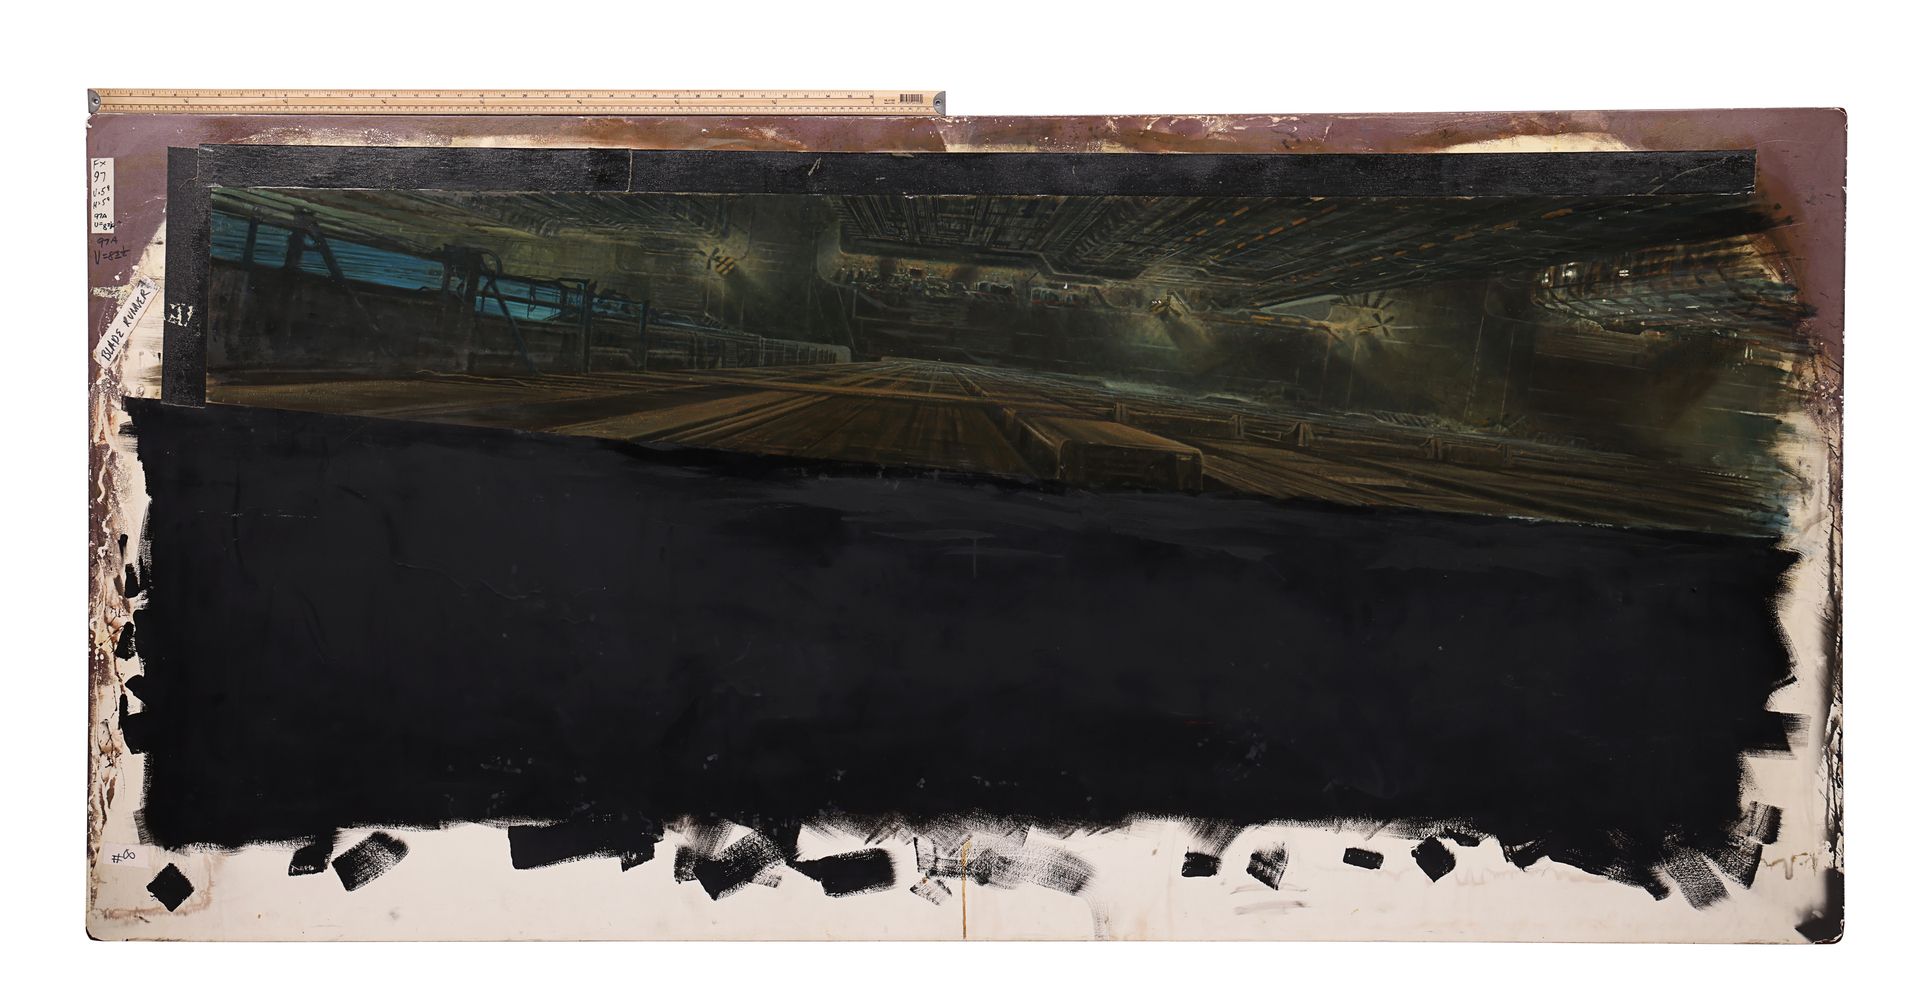 BLADE RUNNER (1982) - Hand-Painted Matthew Yuricich "Deckard Hangs from Roof" Aerial Street View Mat - Image 8 of 8